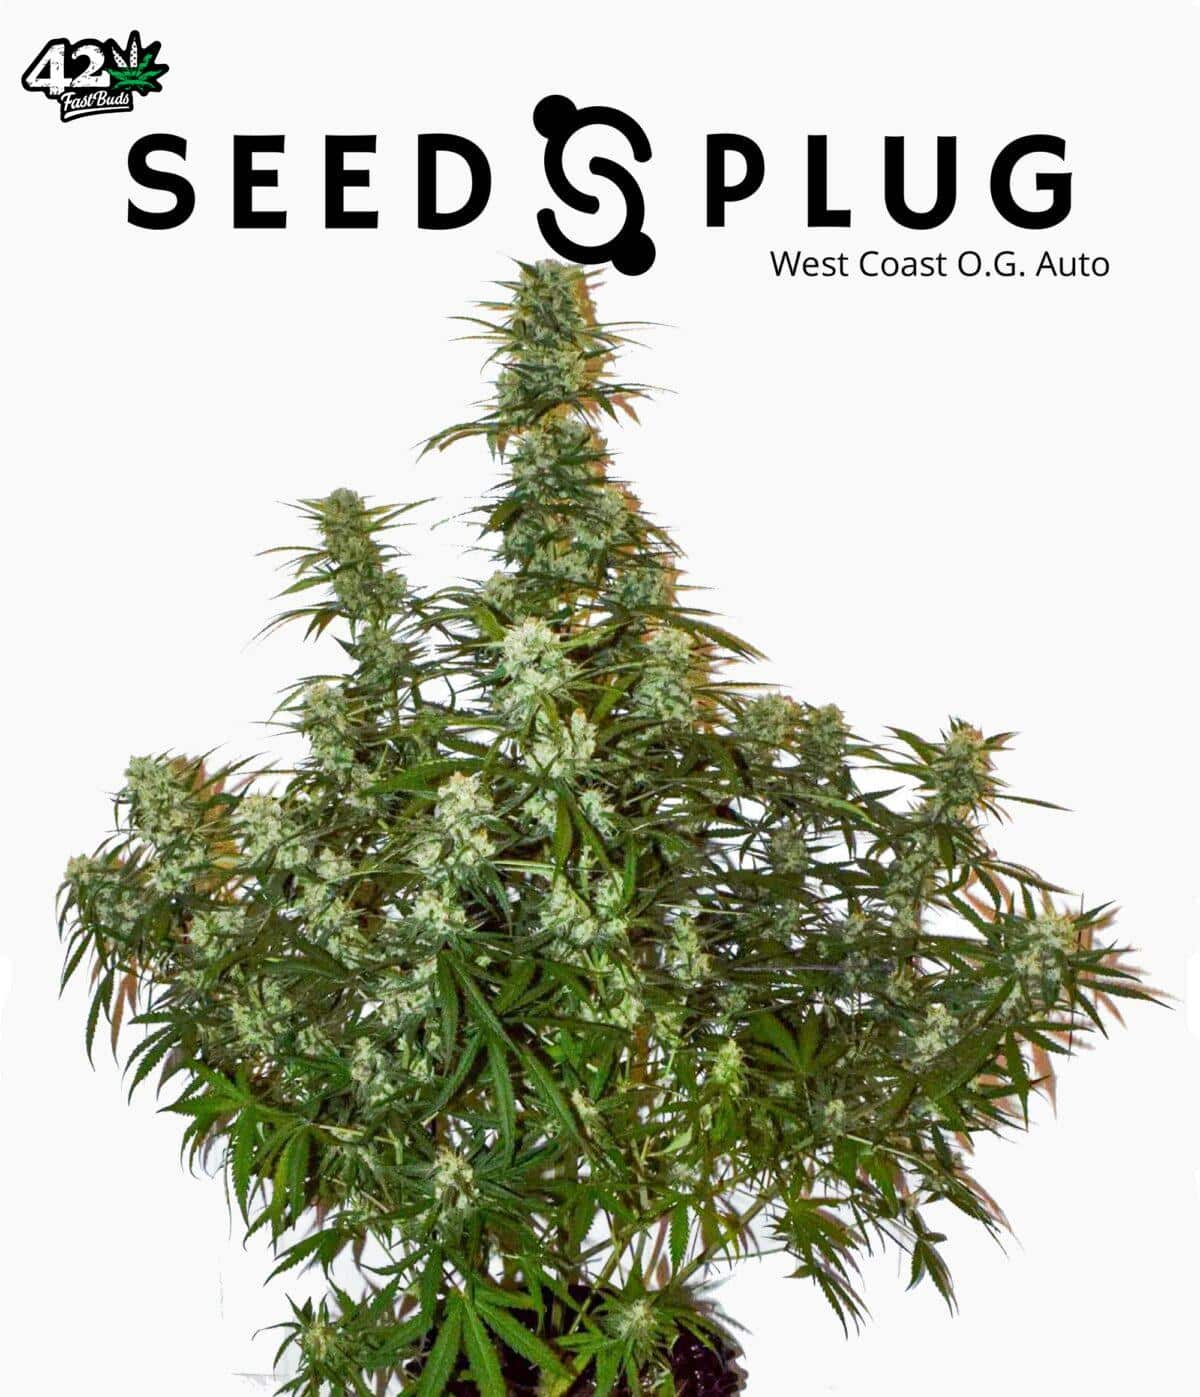 West Coast O.G. Auto | SeedsPlug